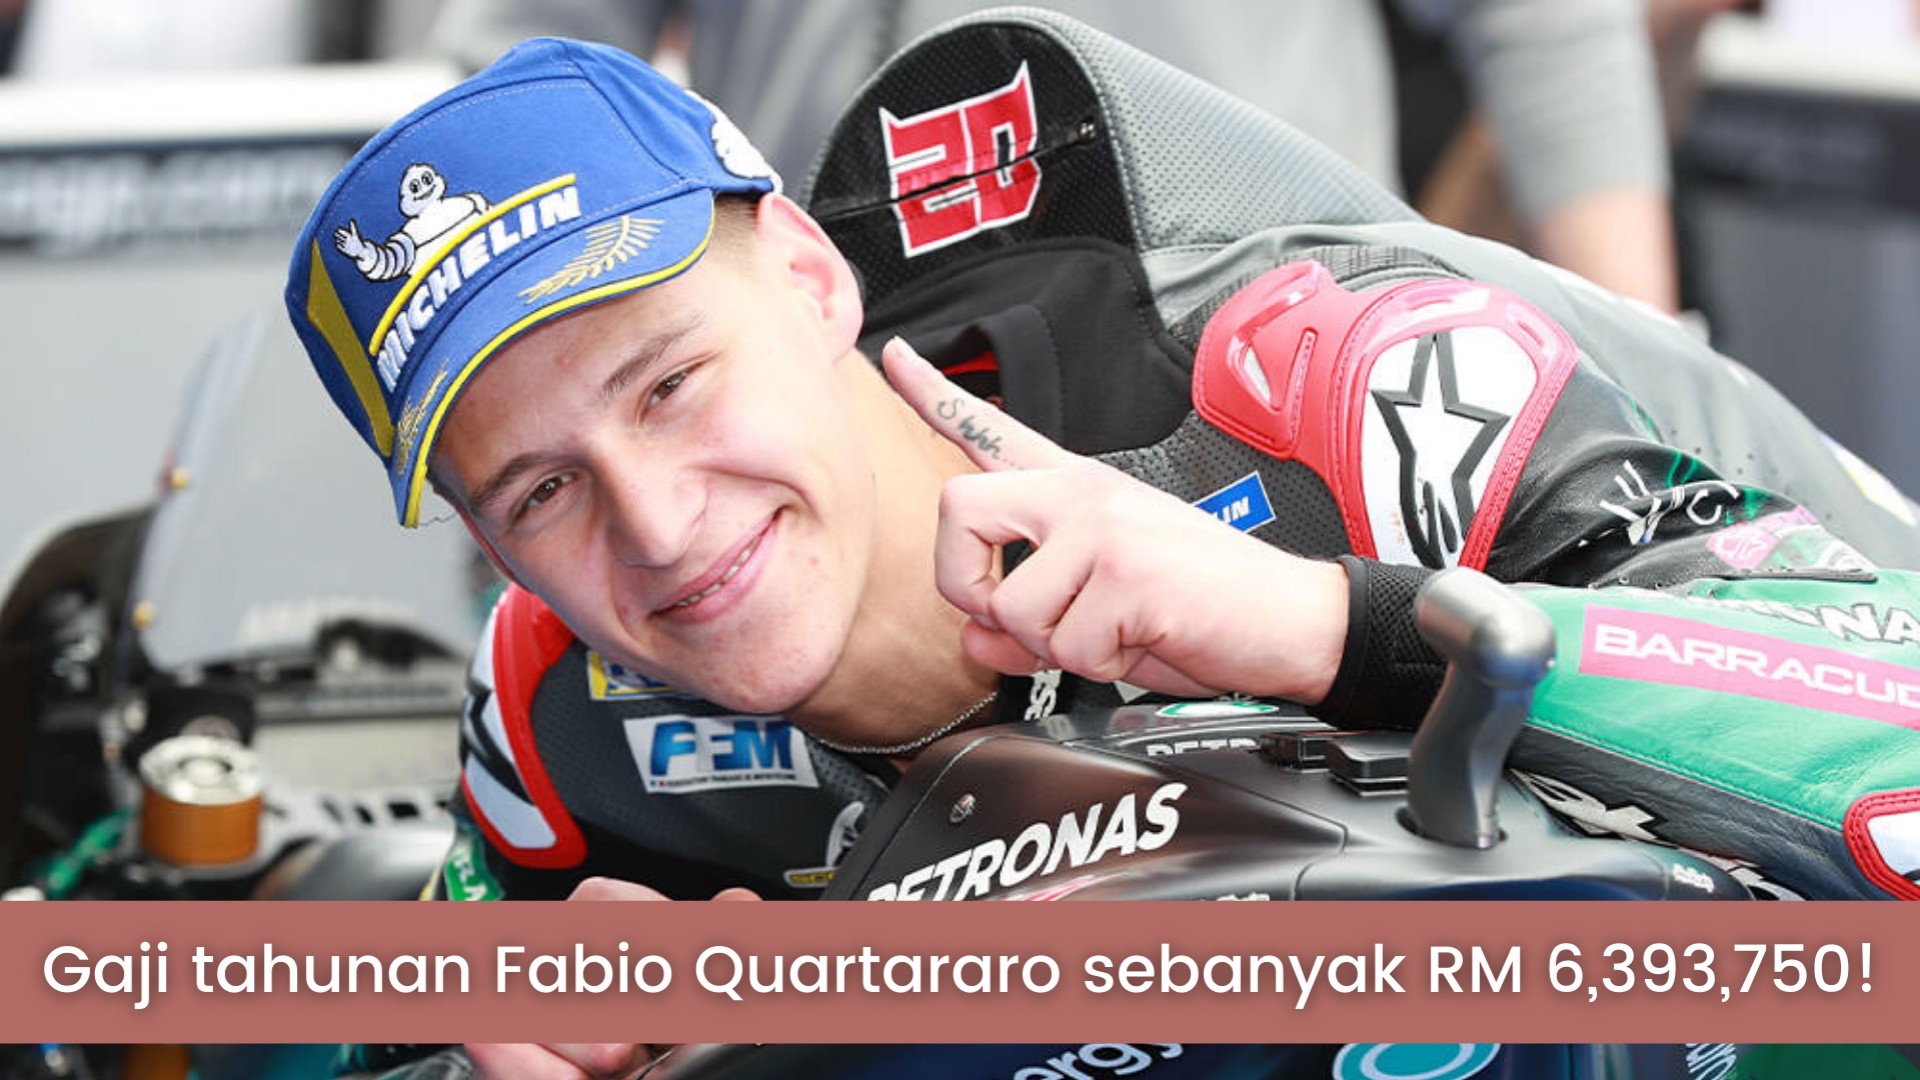 Butiran peribadi Fabio Quartararo - Pemenang dalam MotoGP 2020!  